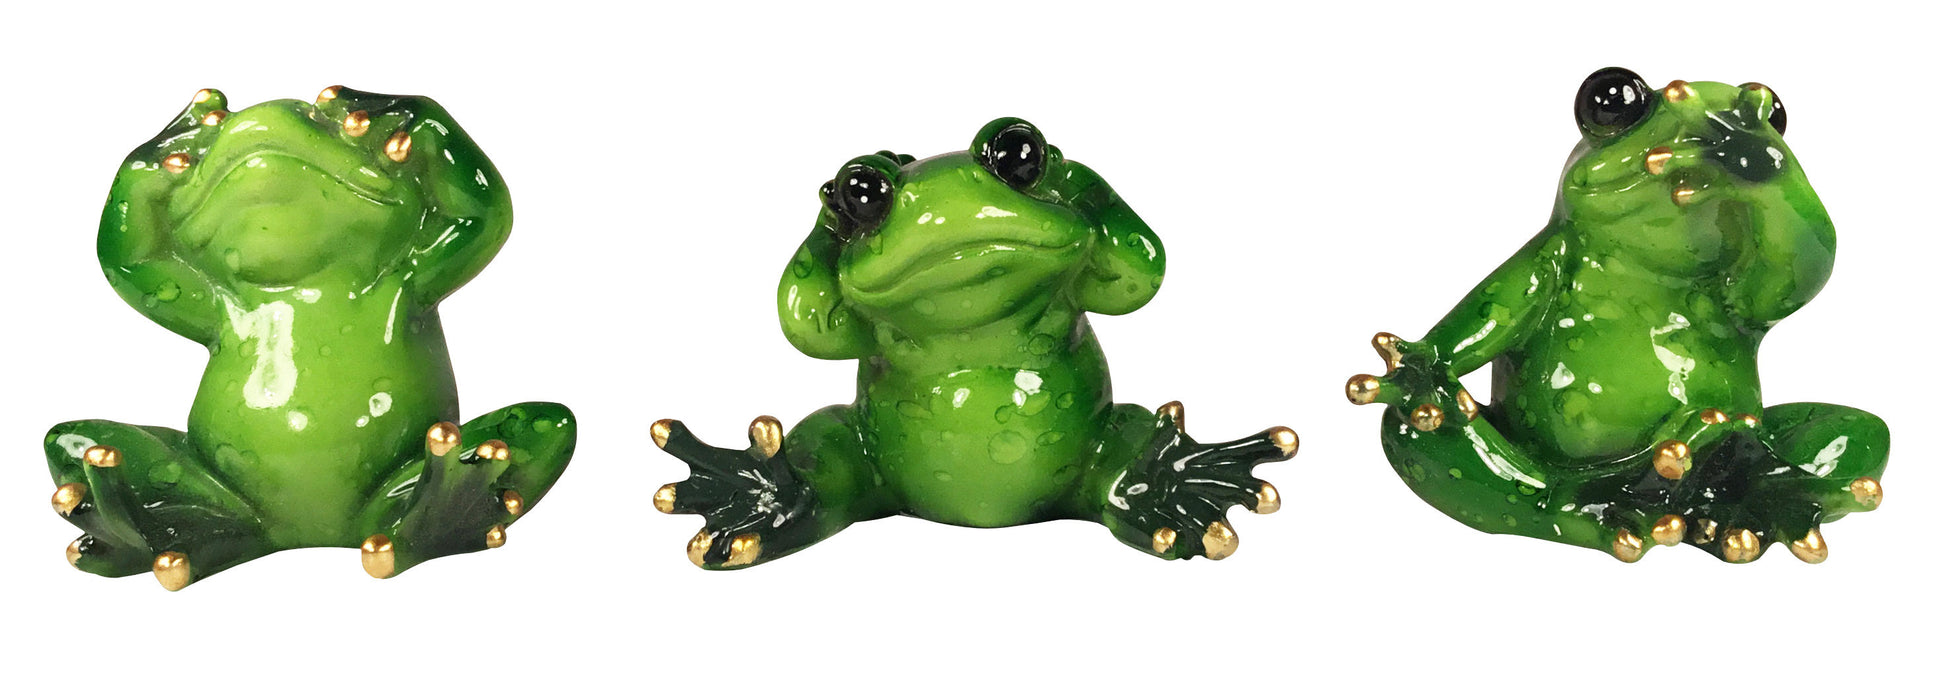 Hear no Evil Frogs